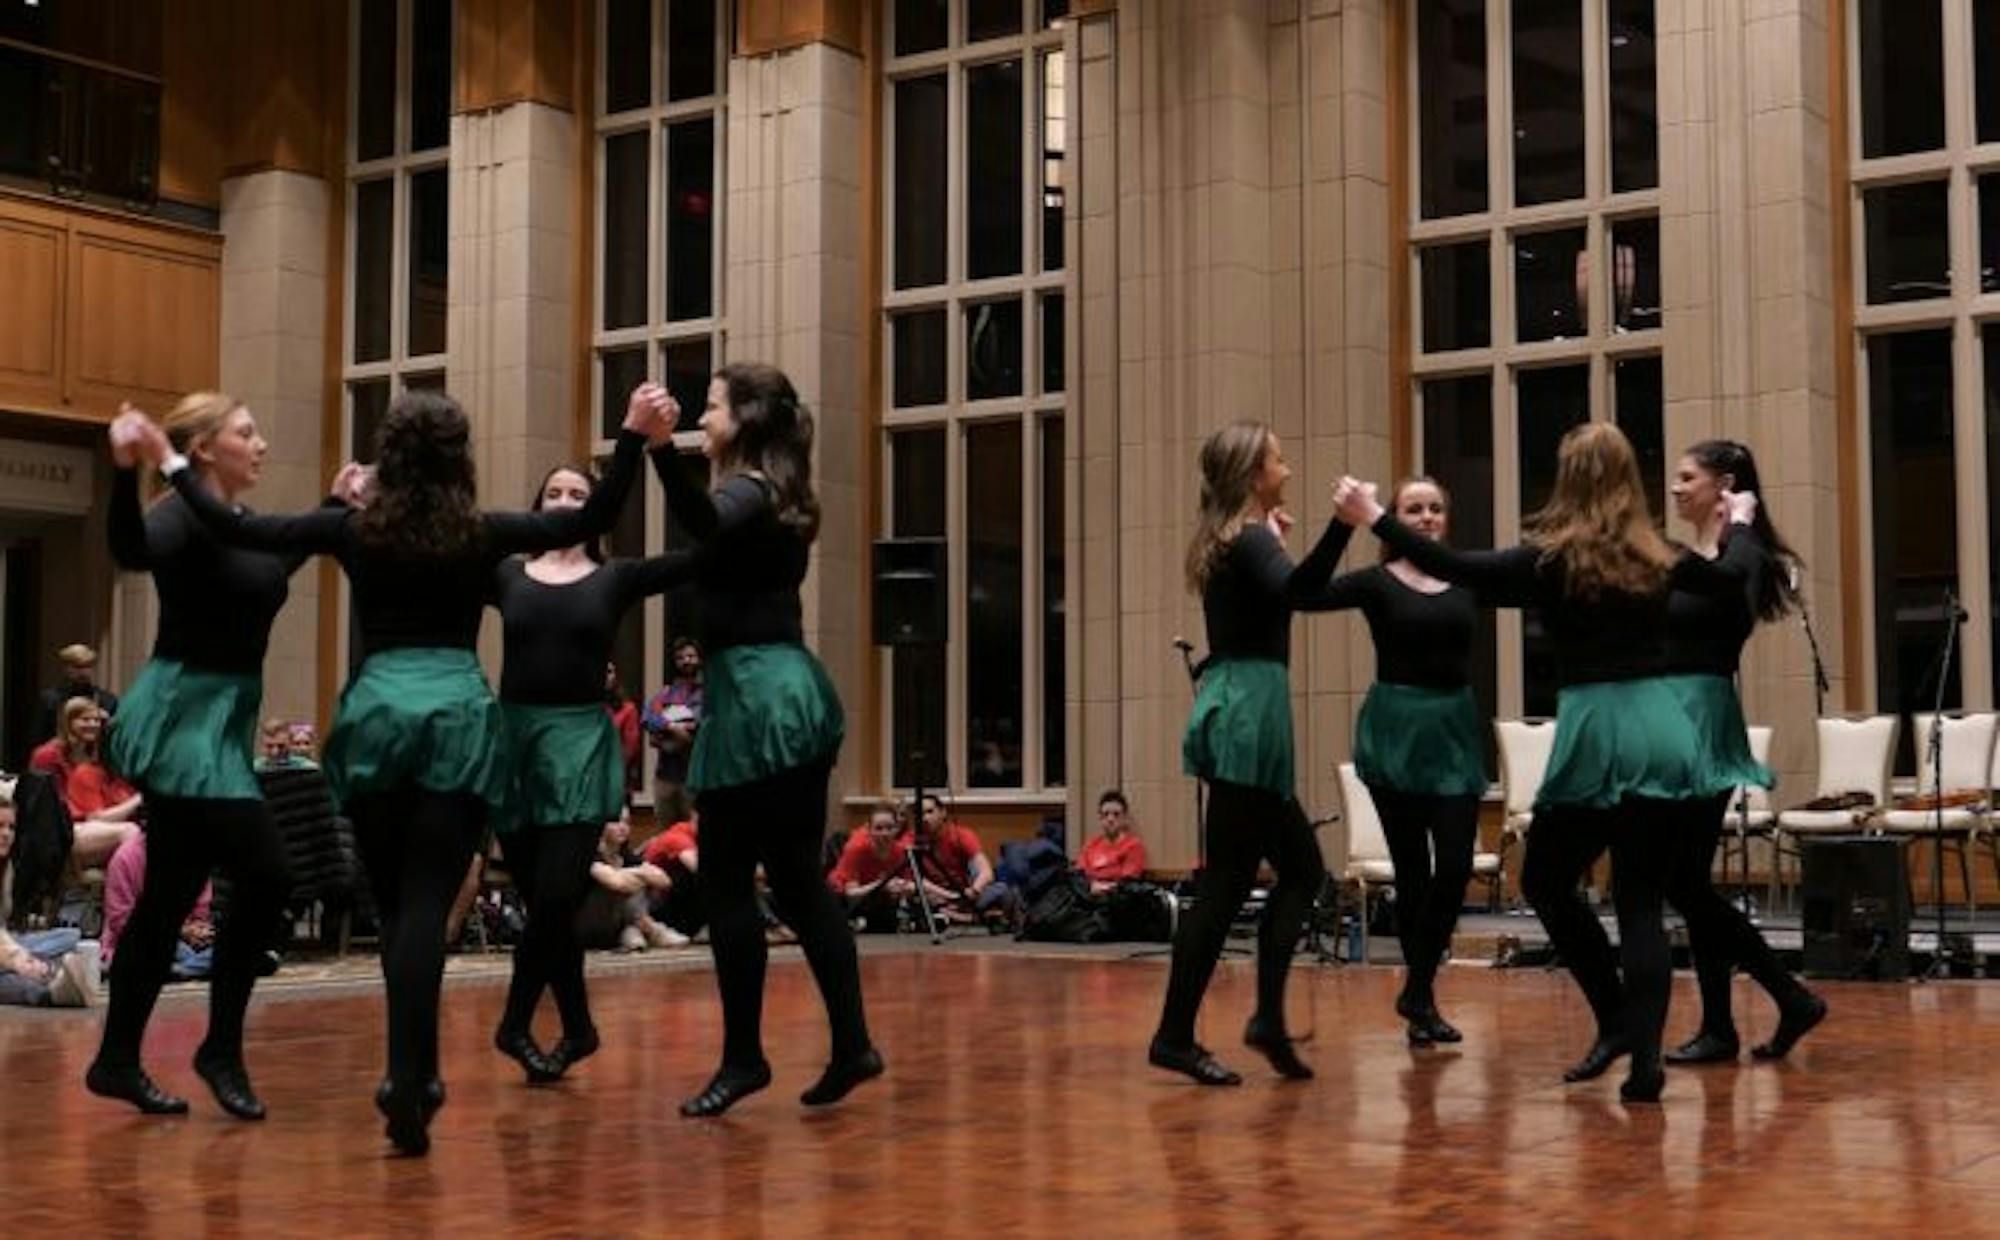 Céilí celebrates Irish dance, culture - The Observer